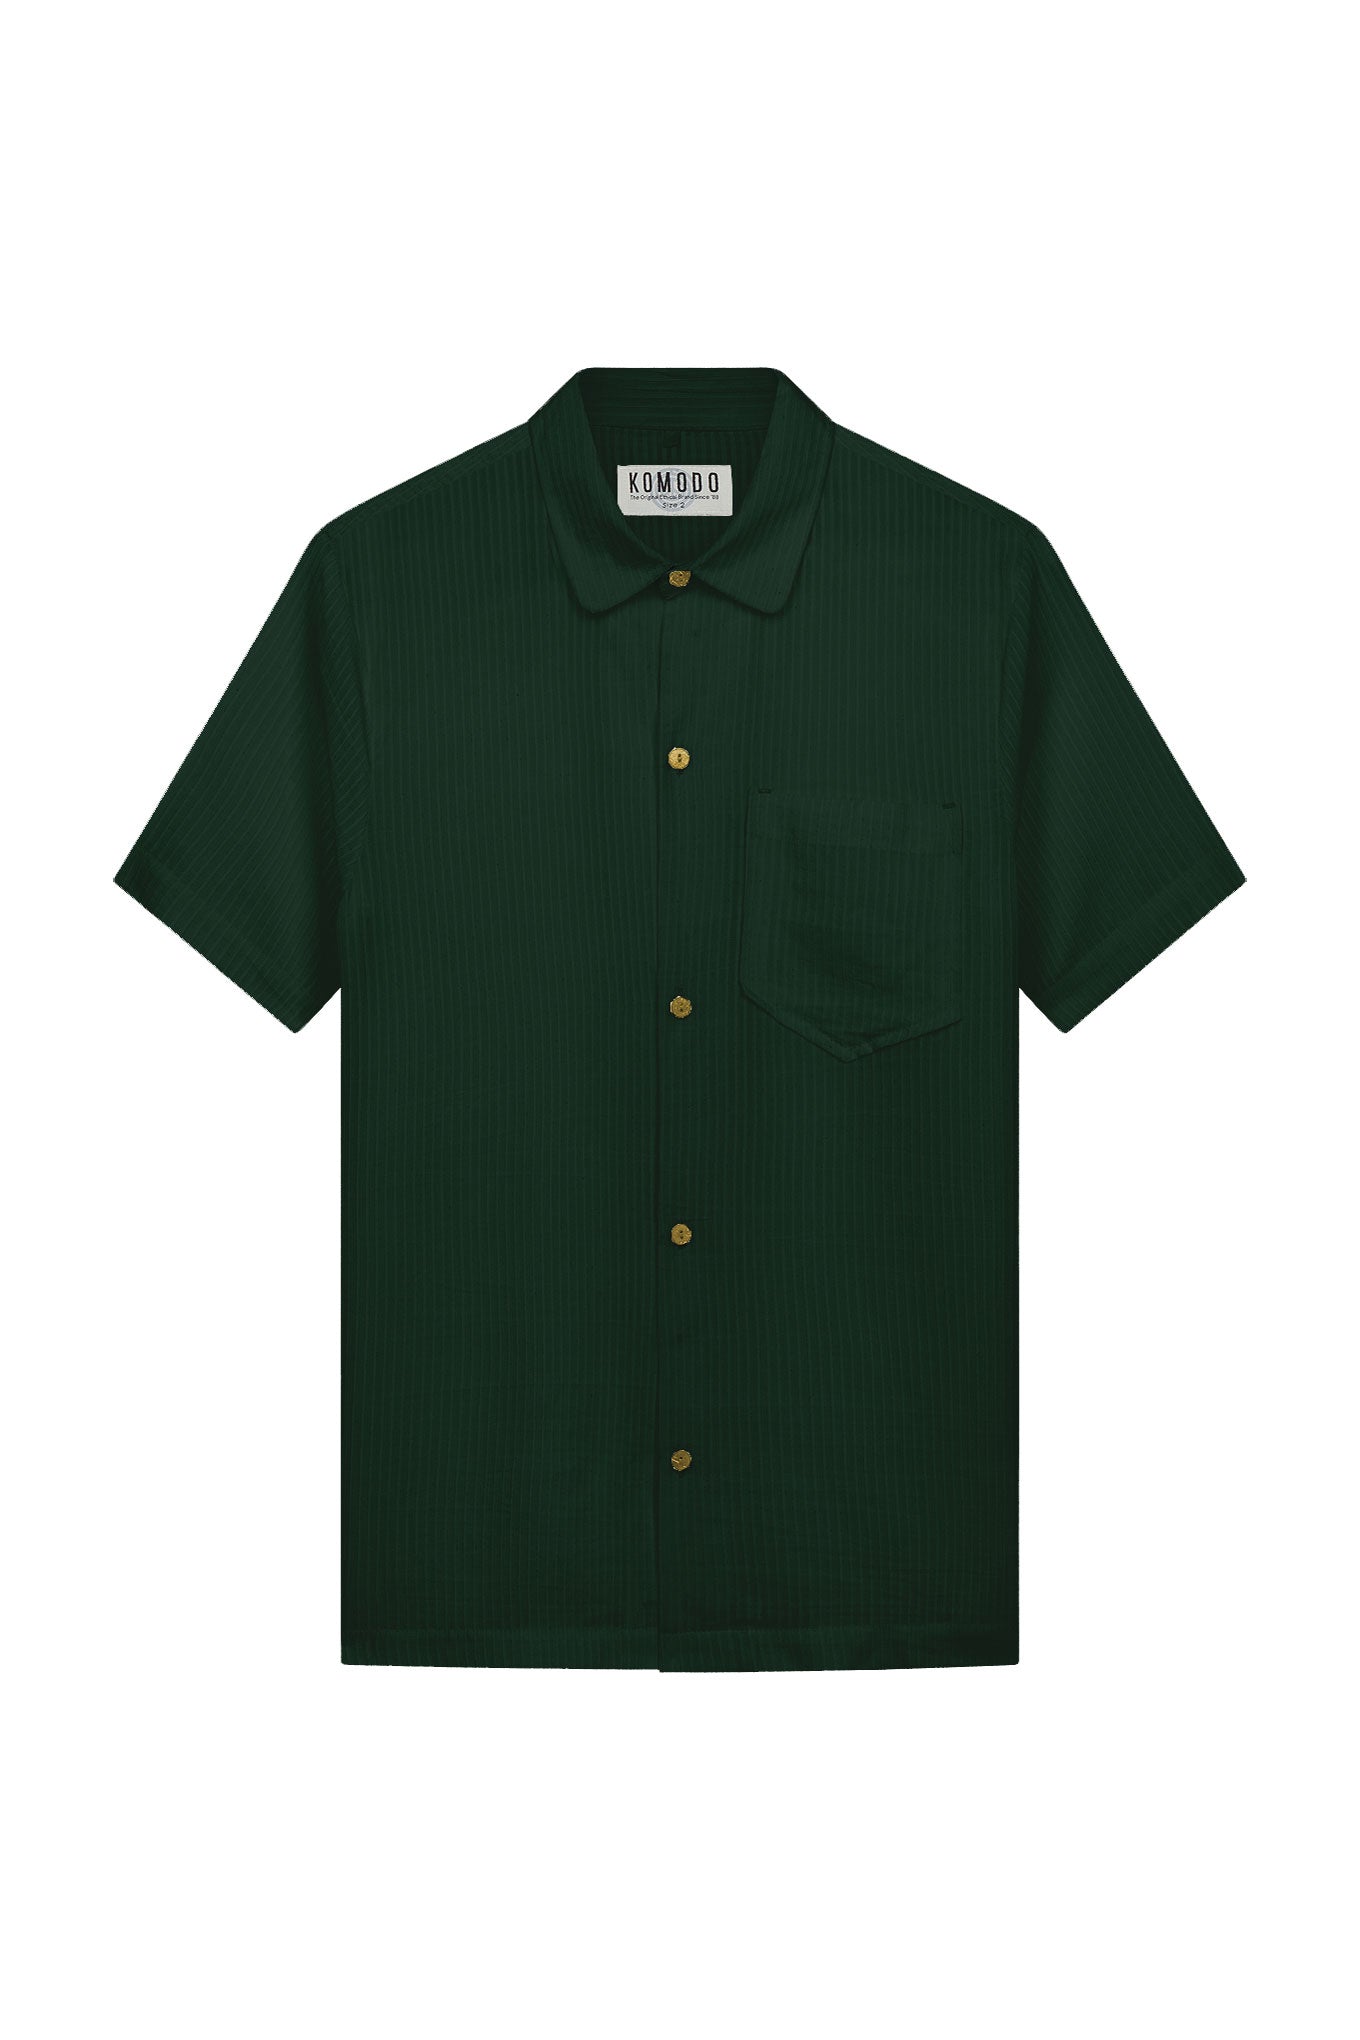 SPINDRIFT Corn Fabric Shirt - Forest Green, Large